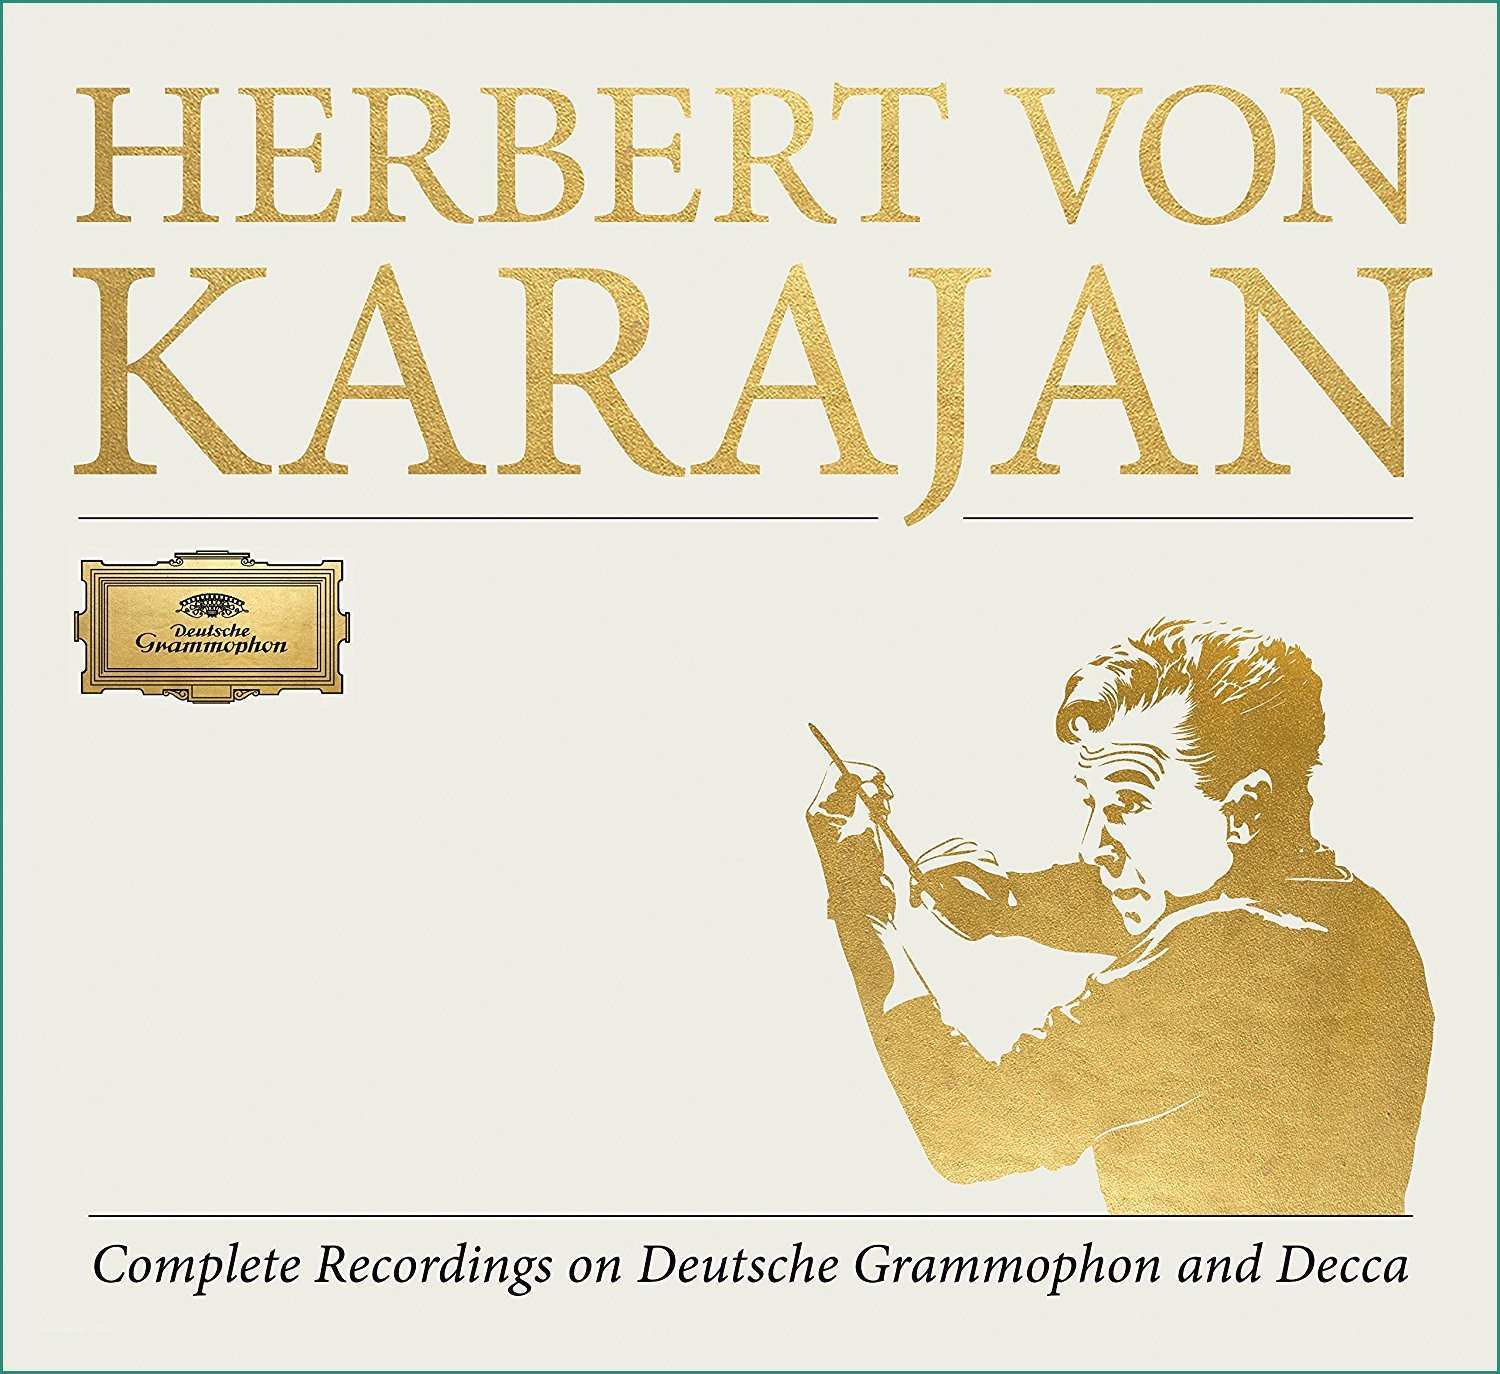 Suite A Tema torino E Herbert Von Karajan Plete Recordings Deutsche Grammophon and